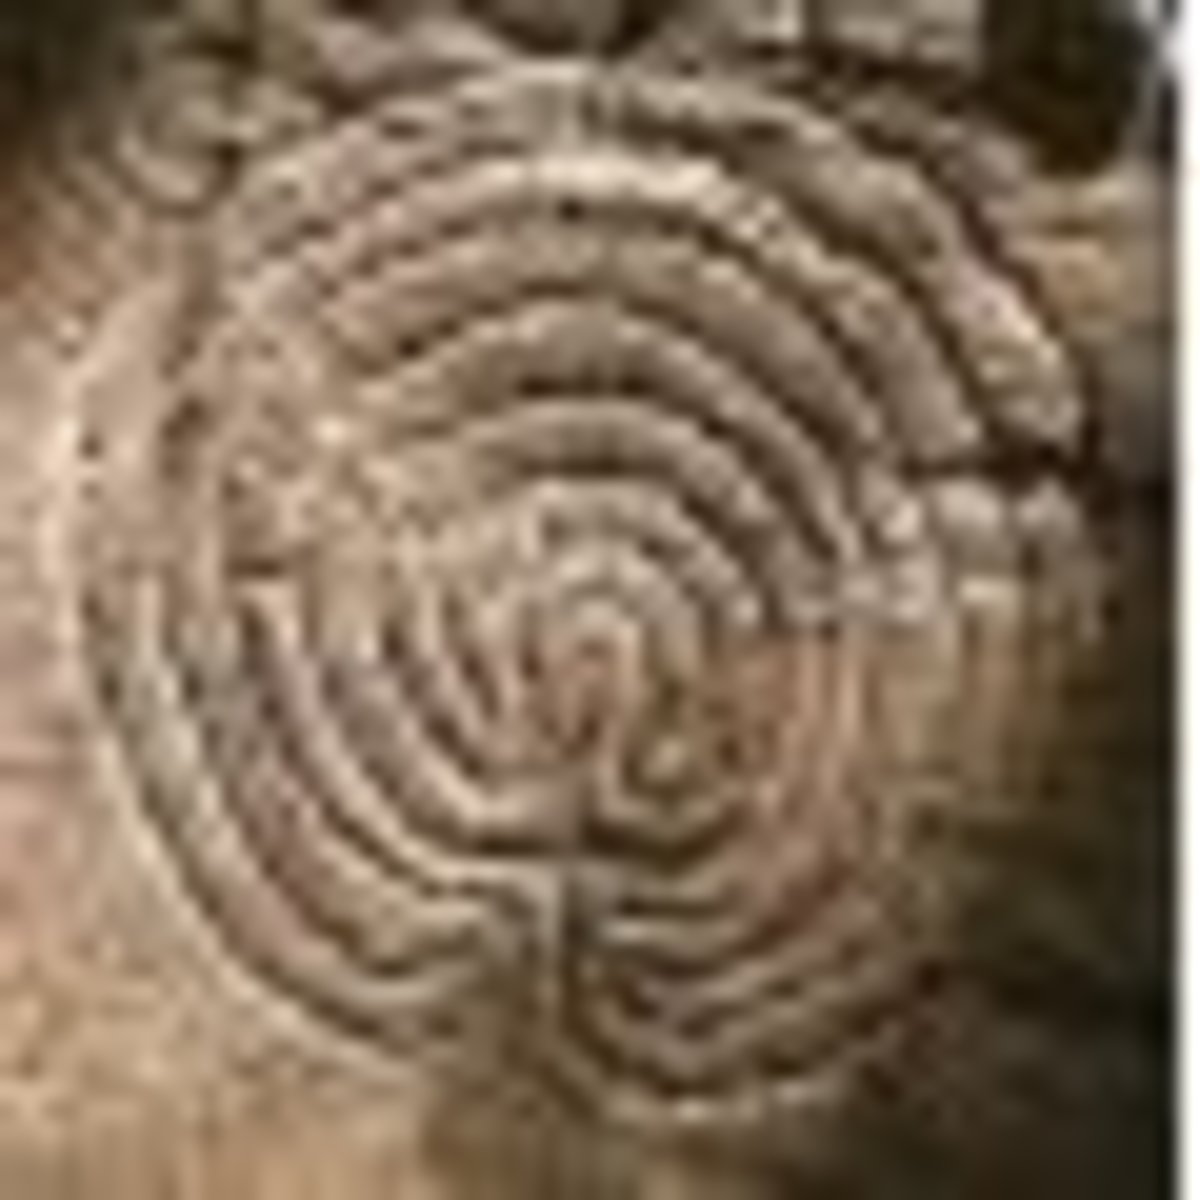 labyrinth-symbols